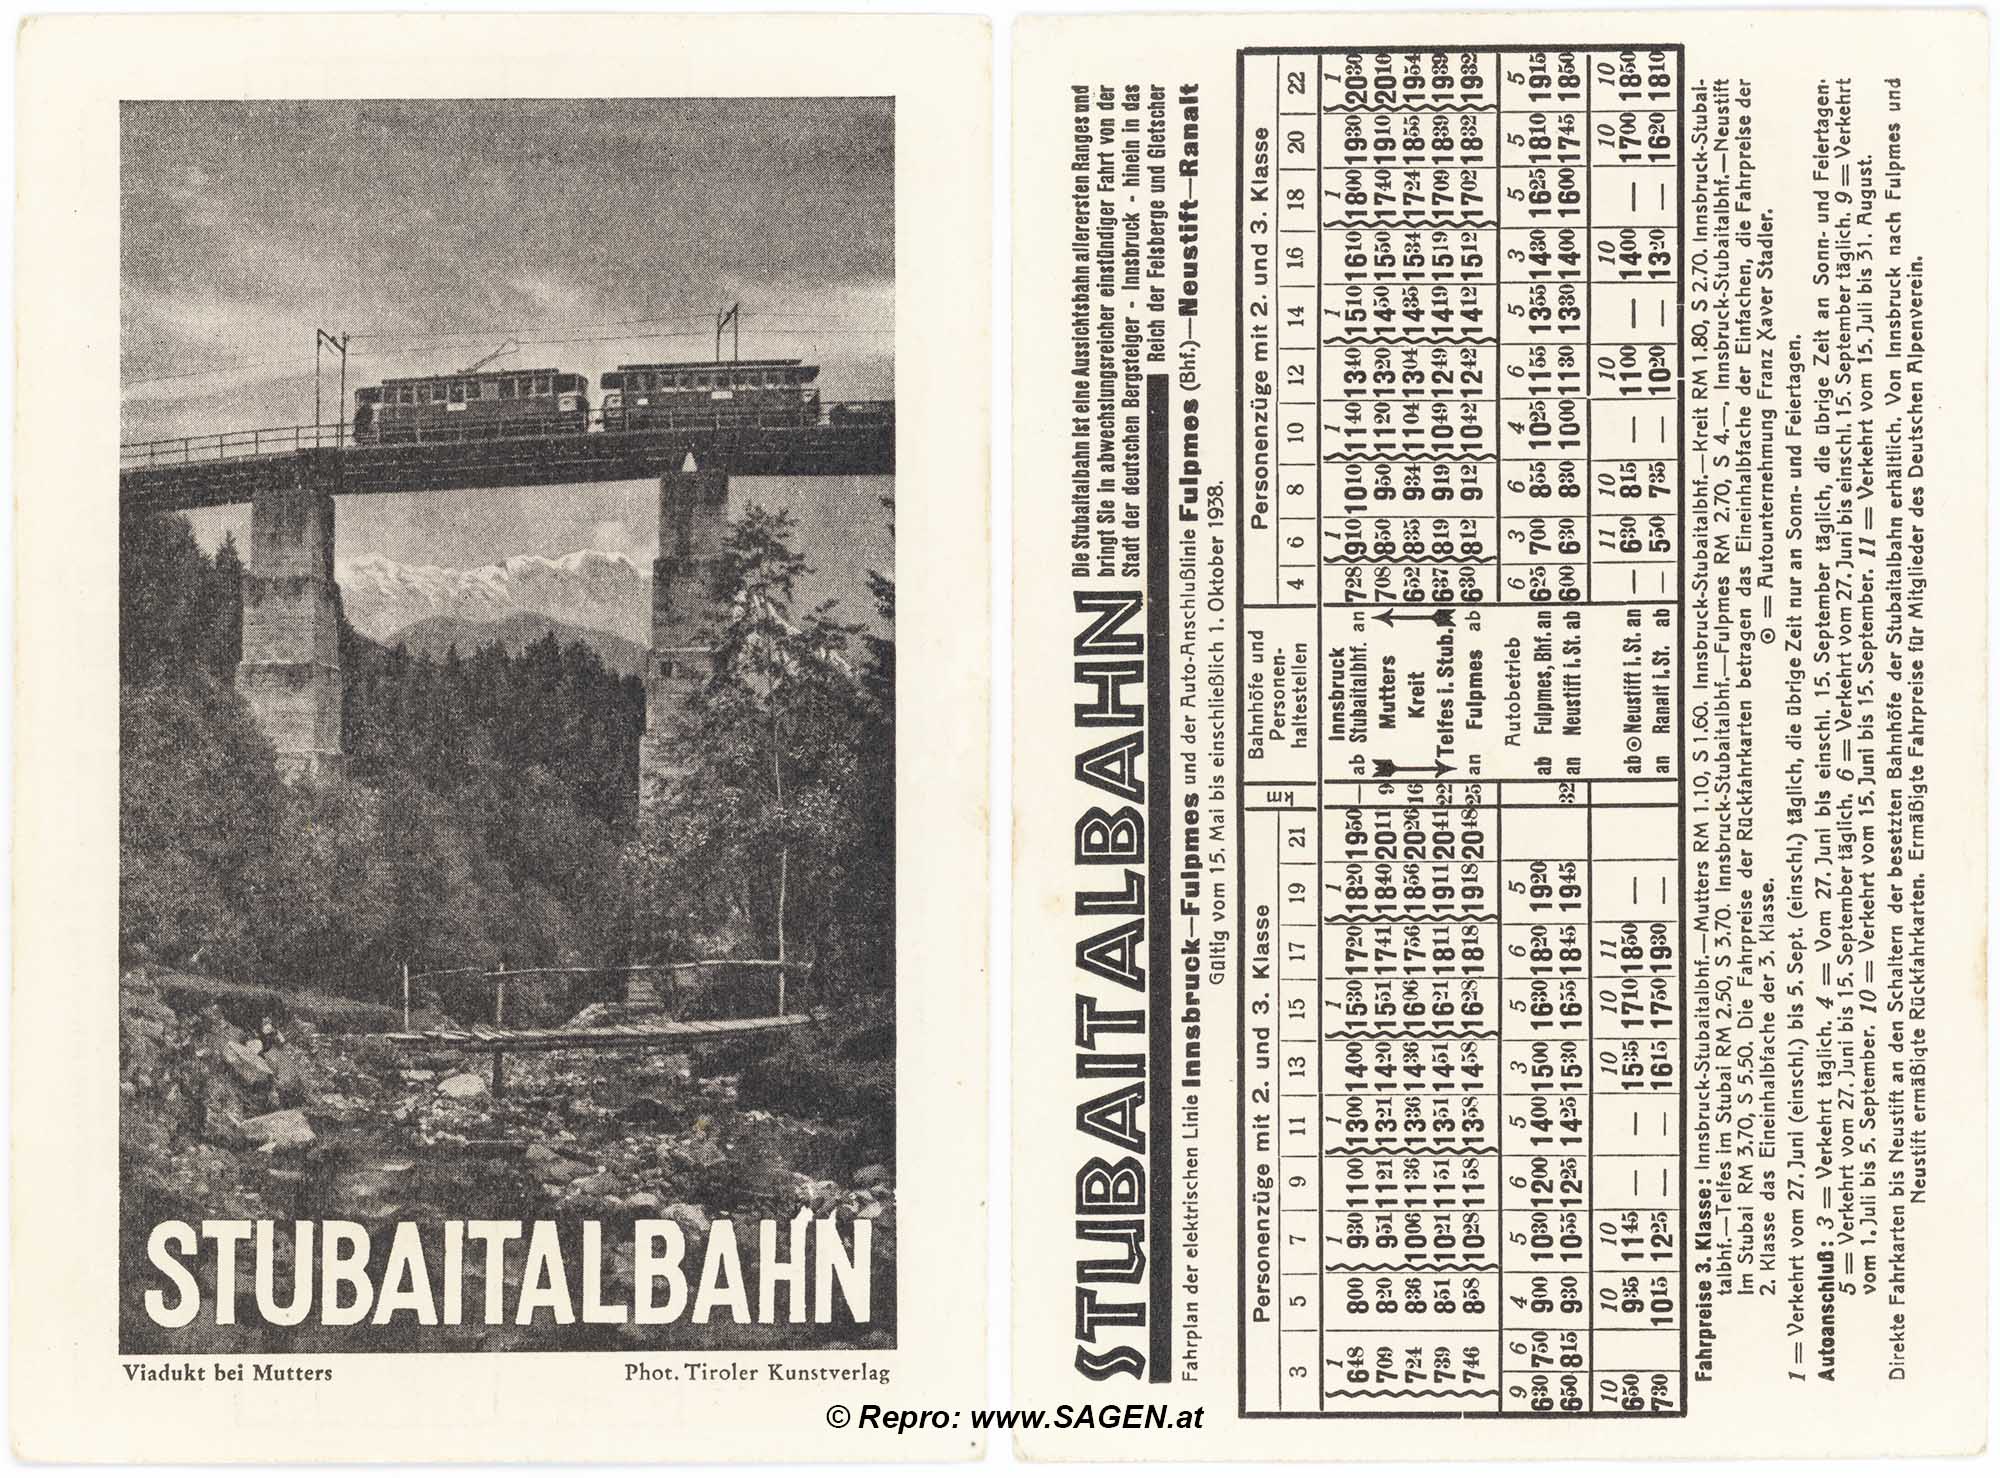 Stubaitalbahn, Viadukt bei Mutters, Fahrplan 1938